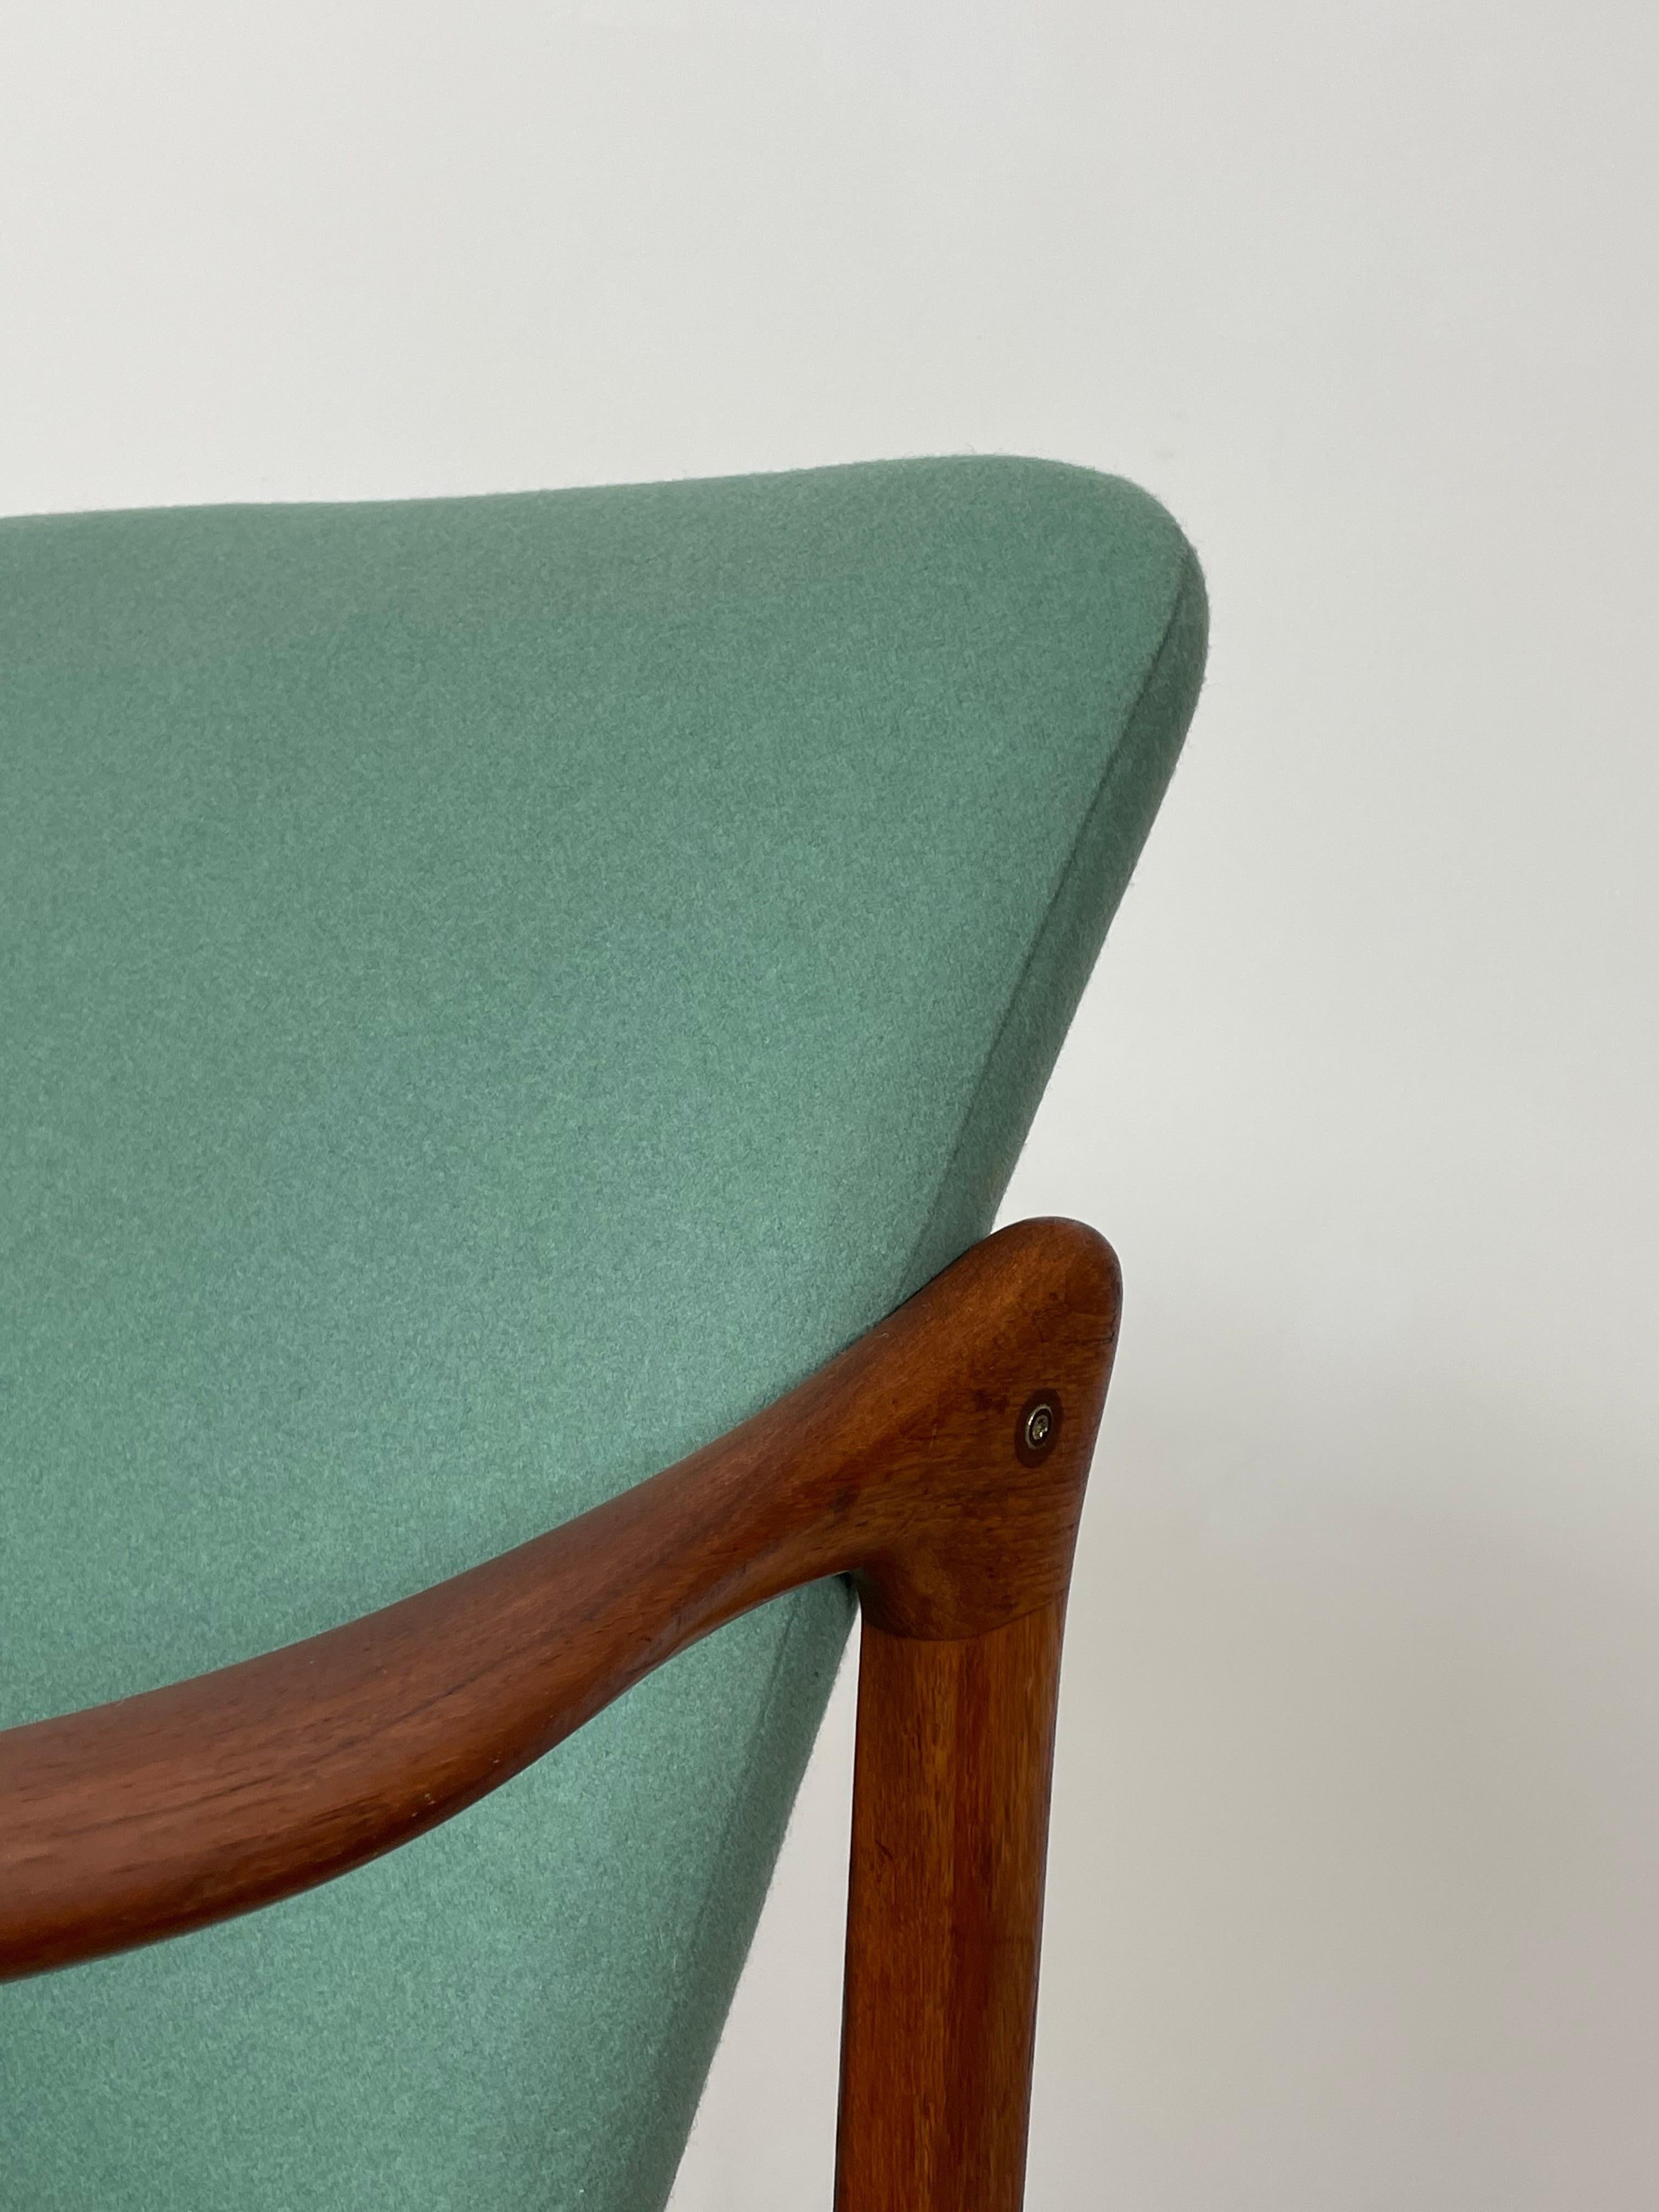 Nordic Teak Arm Chair by Fredrik A. Kayser, 1950s For Sale 5